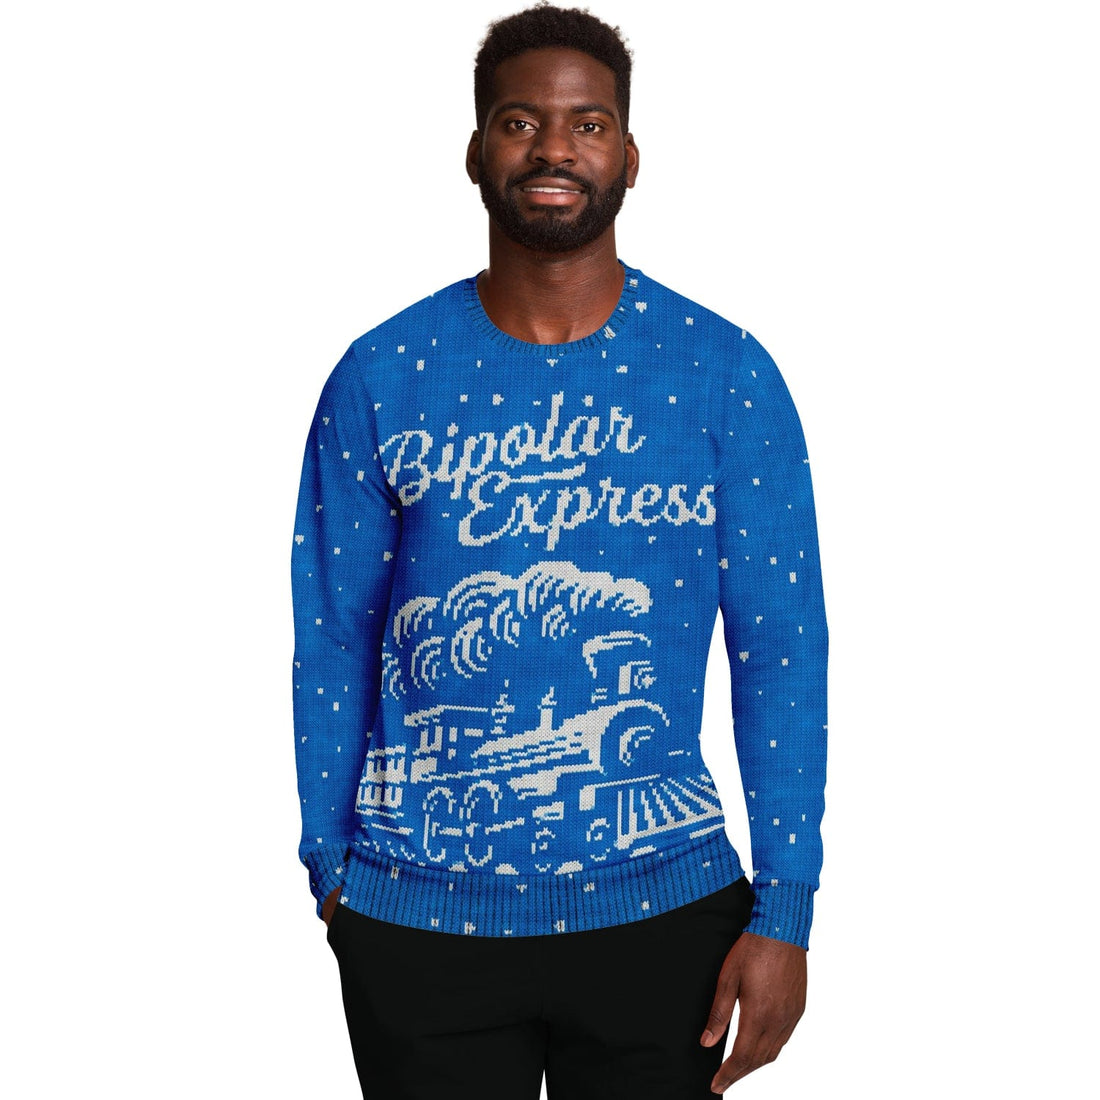 Kate McEnroe New York Bipolar Express Funny Ugly Christmas SweaterSweatshirtSBSWF_D - BMHJD - XS